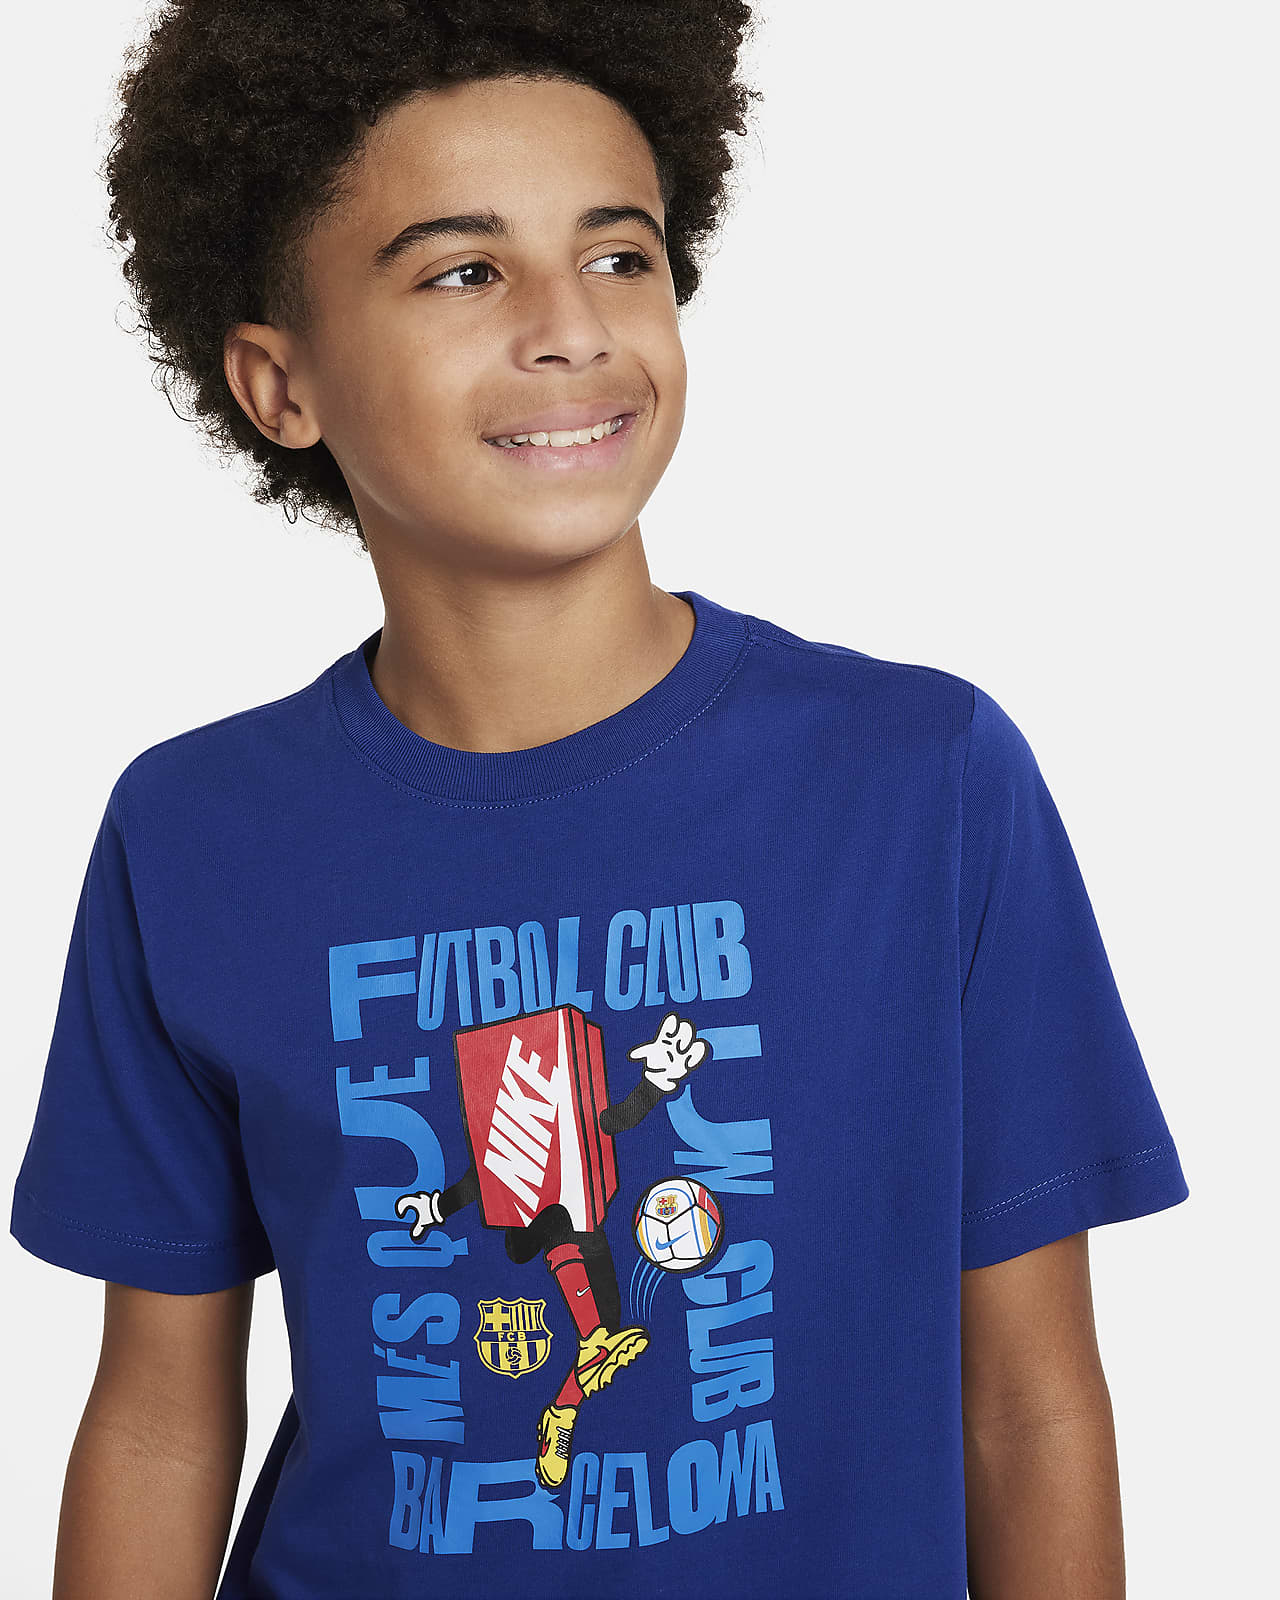 FC Barcelona Camiseta Nike Football - Niño/a